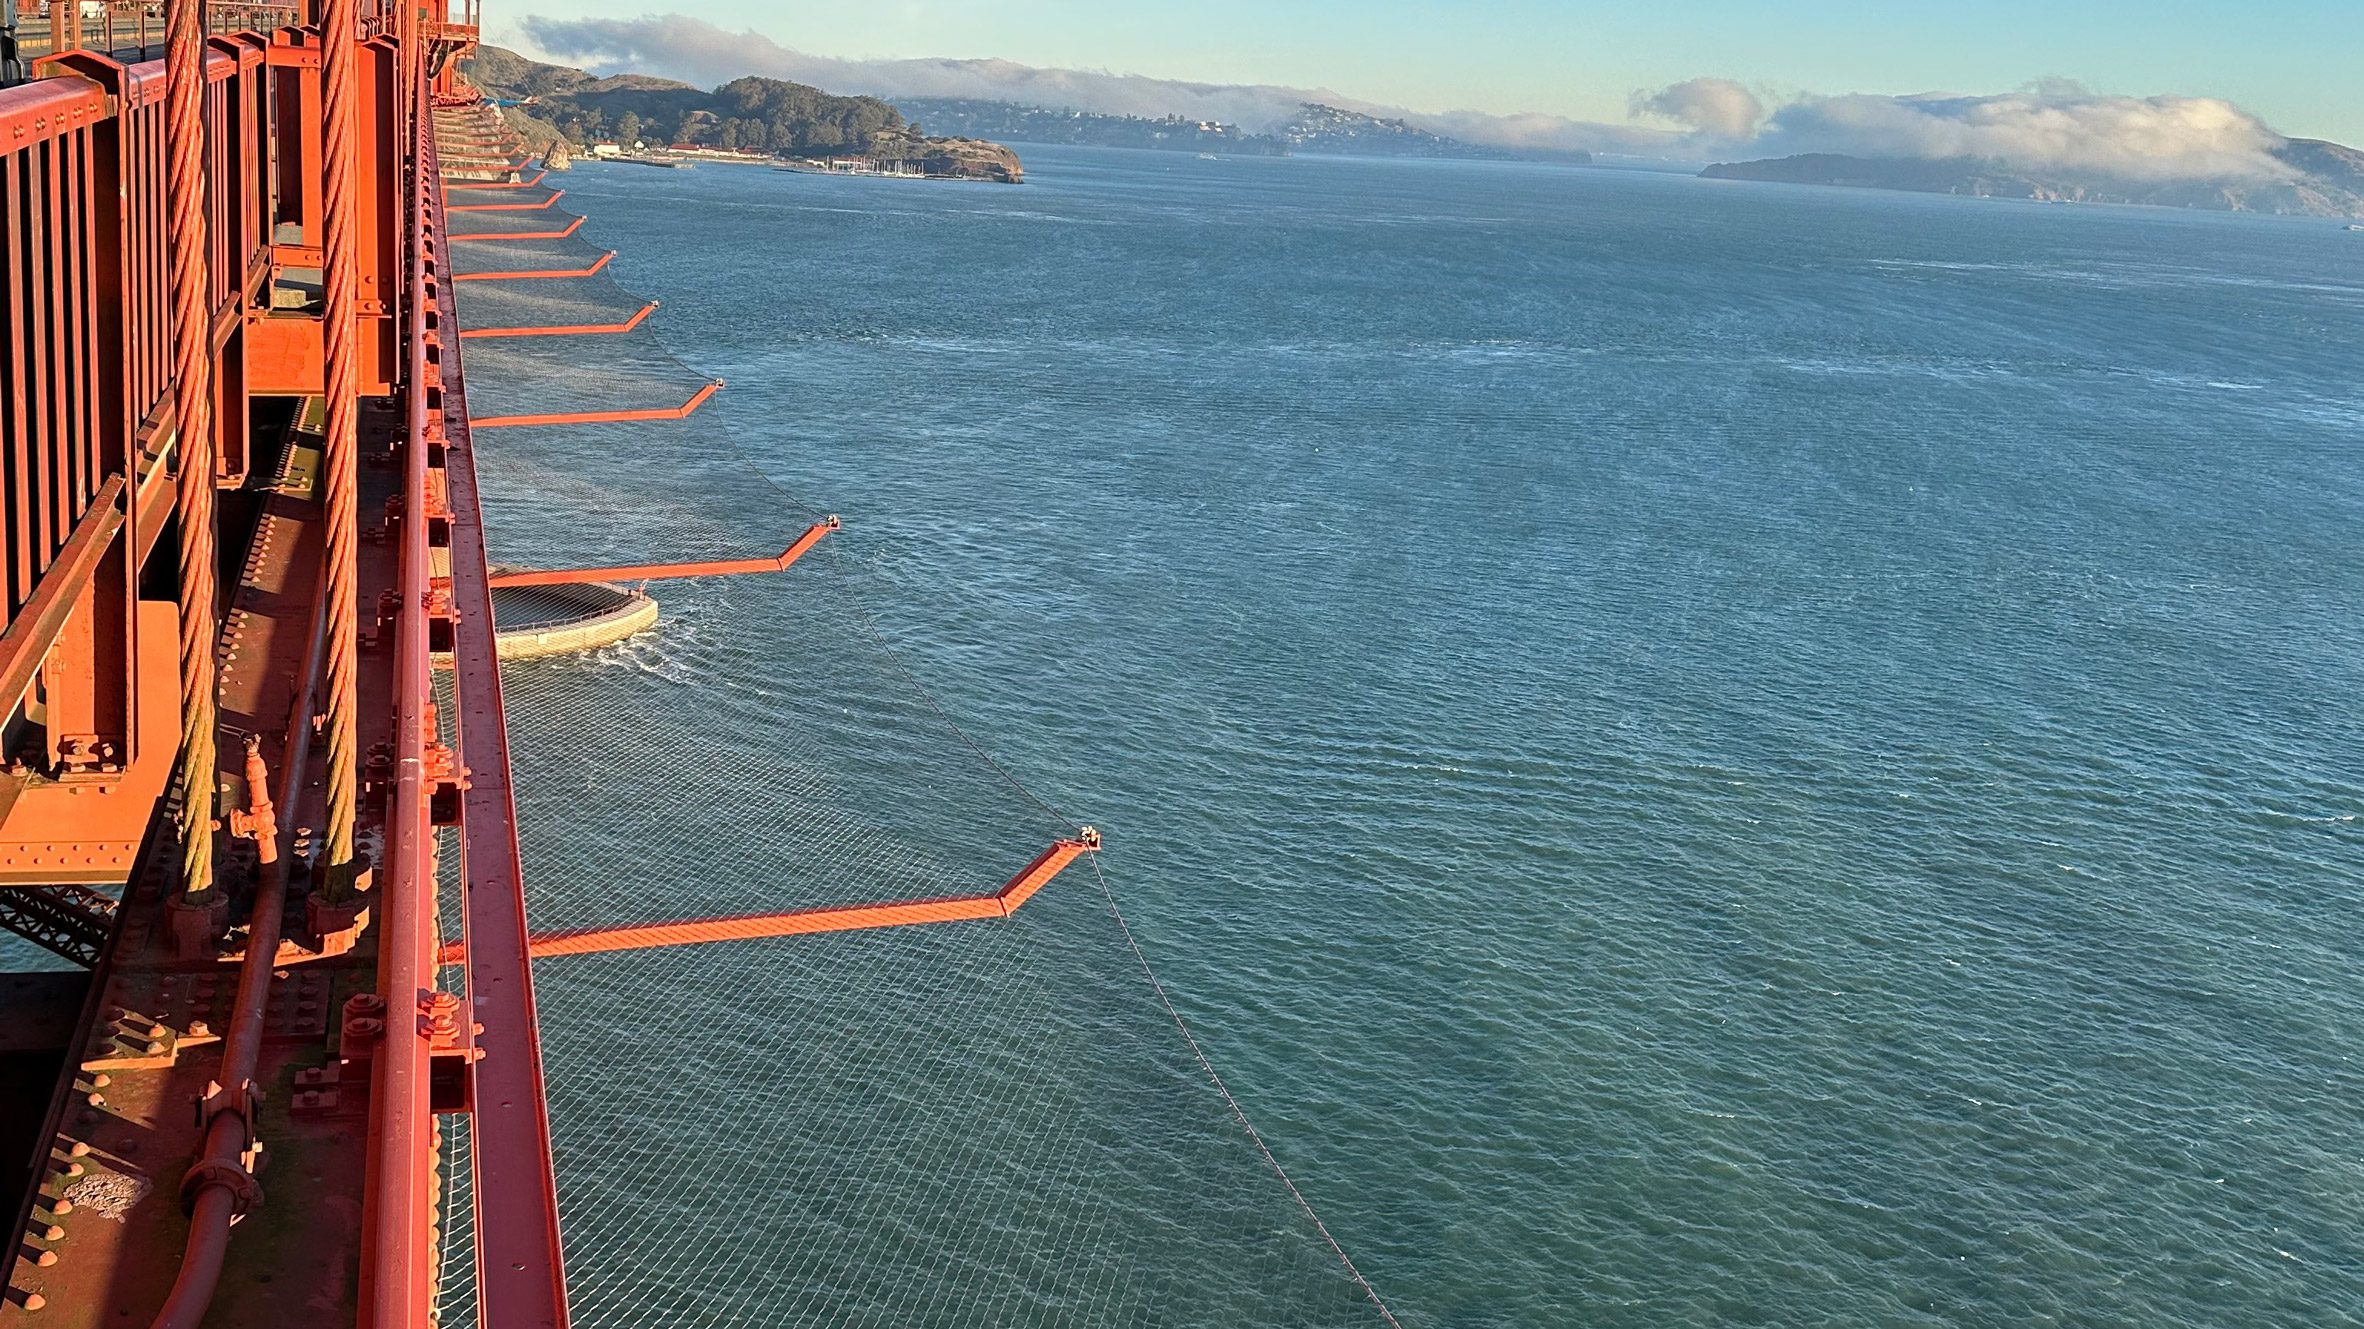 Kilometres of suicide-deterrent nets installed under Golden Gate Bridge